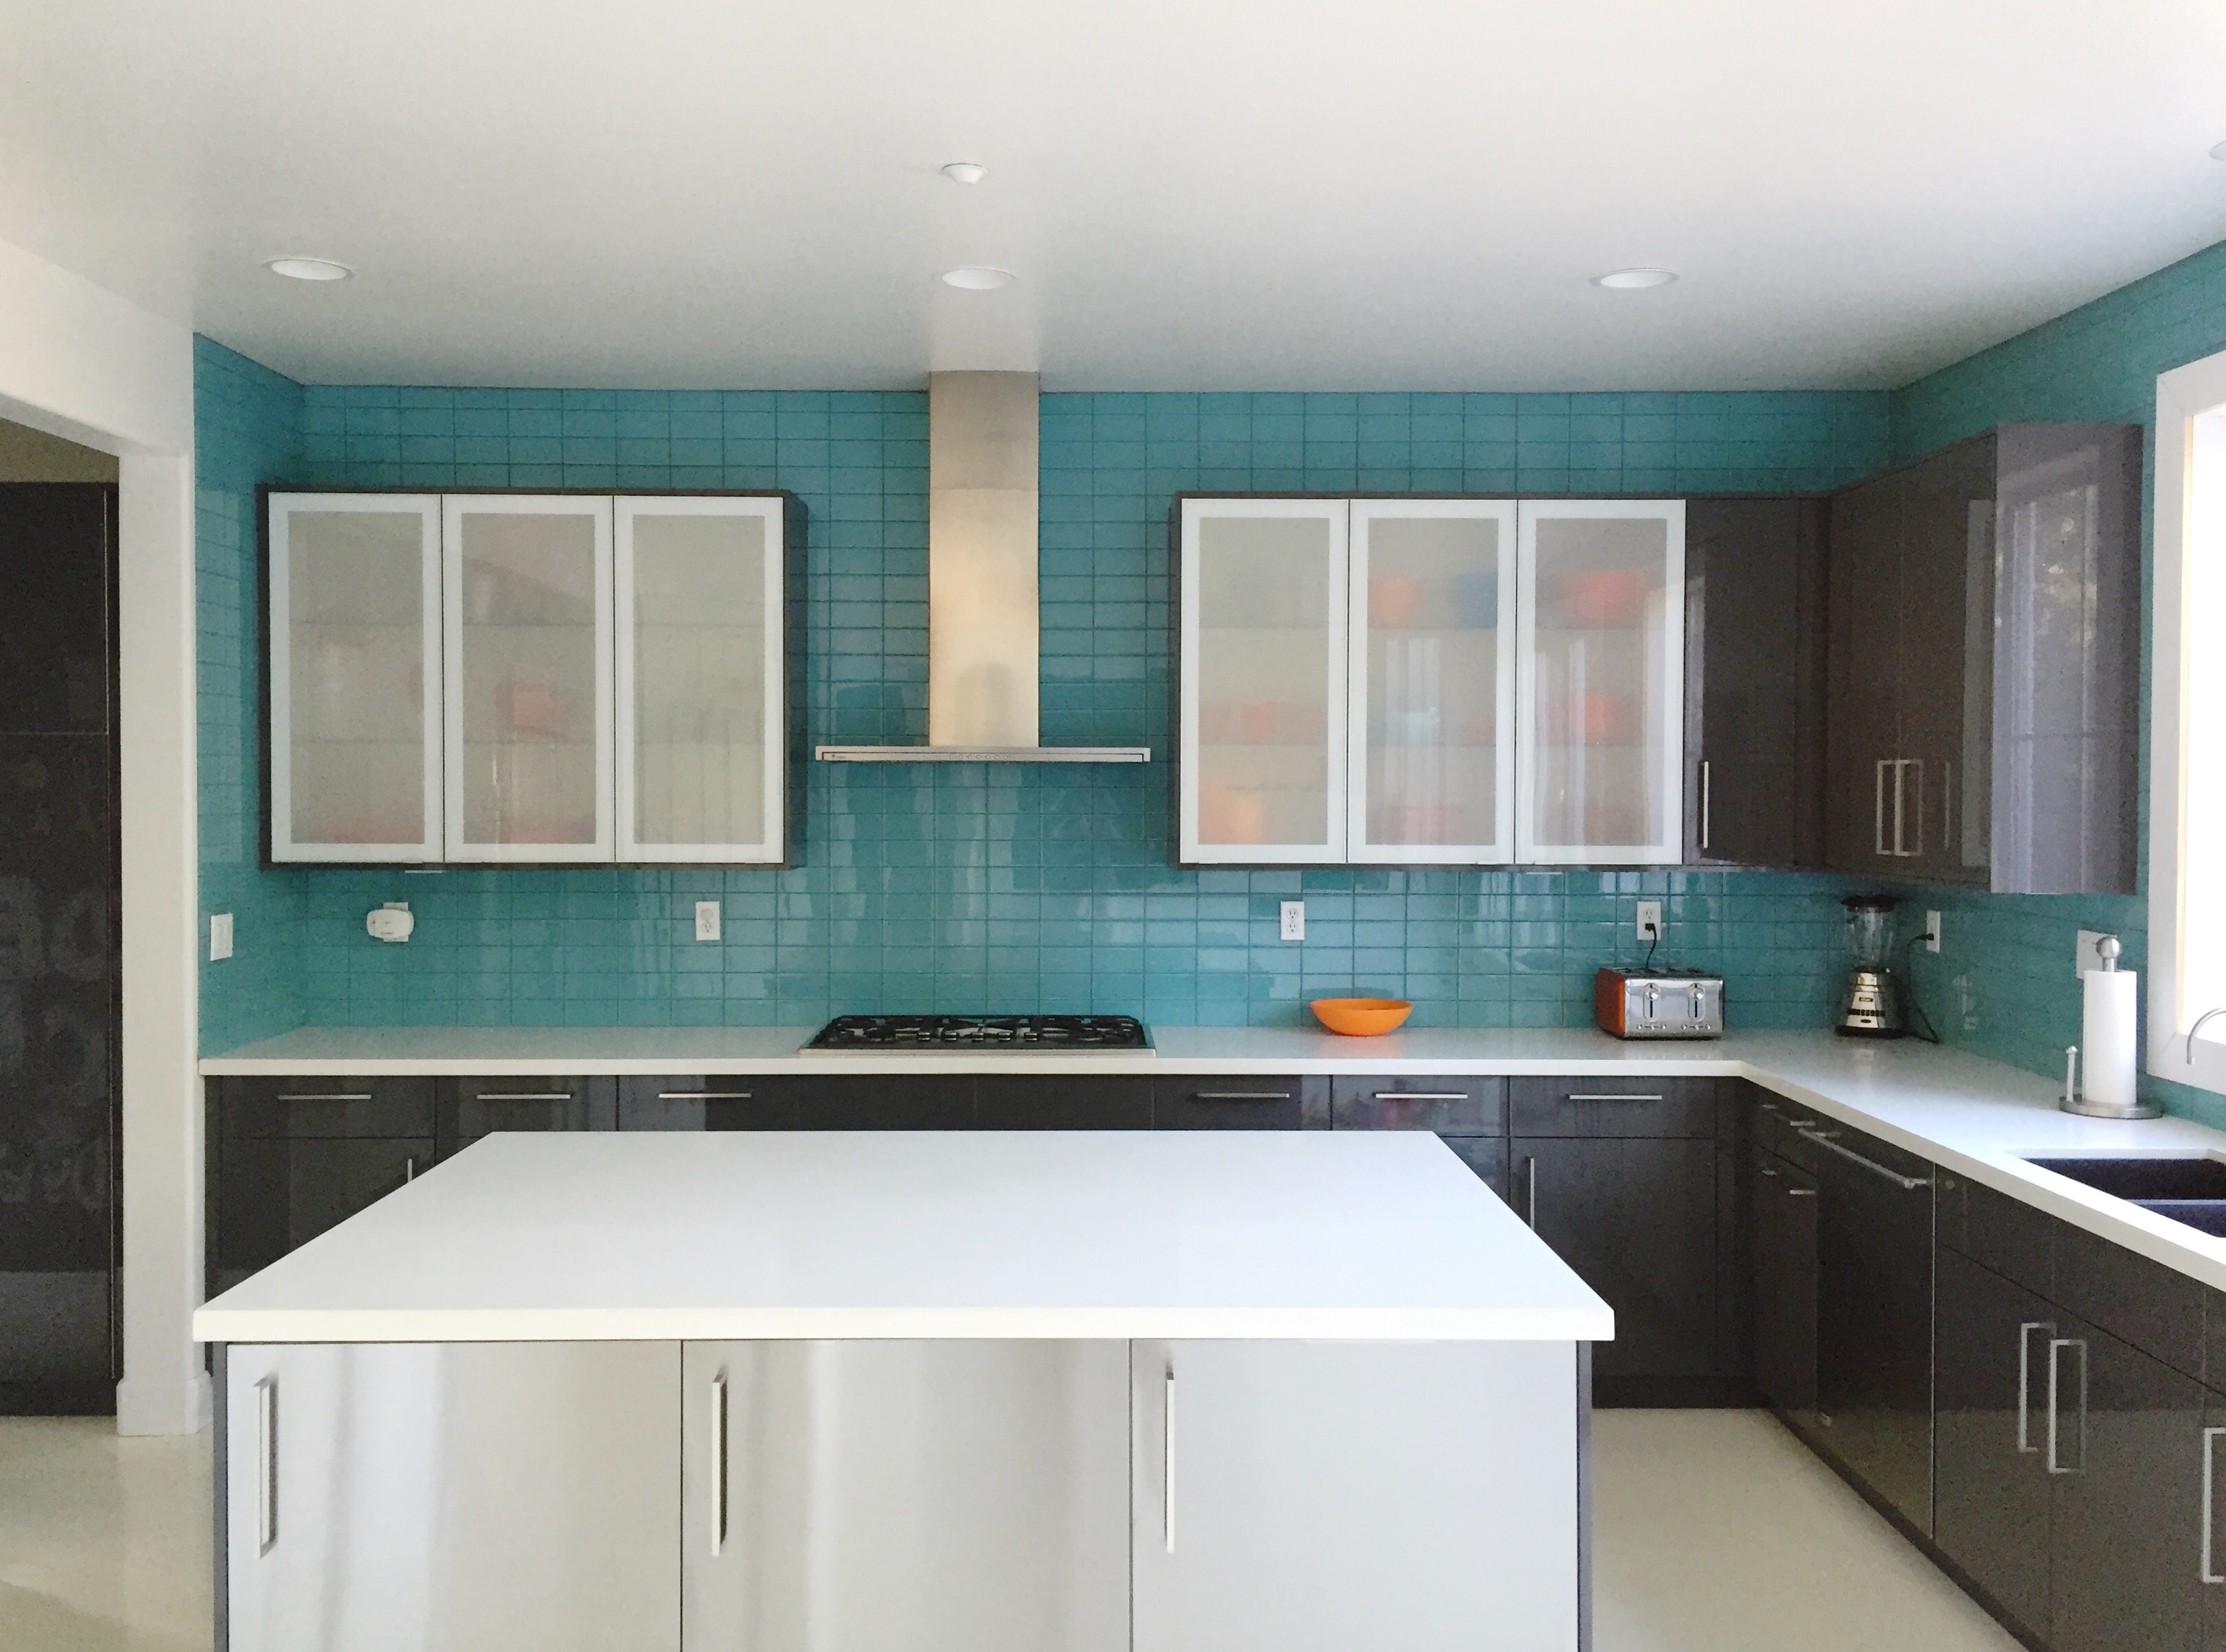 How To Install Glass Tile Backsplash Easy DIY For A Better Kitchen